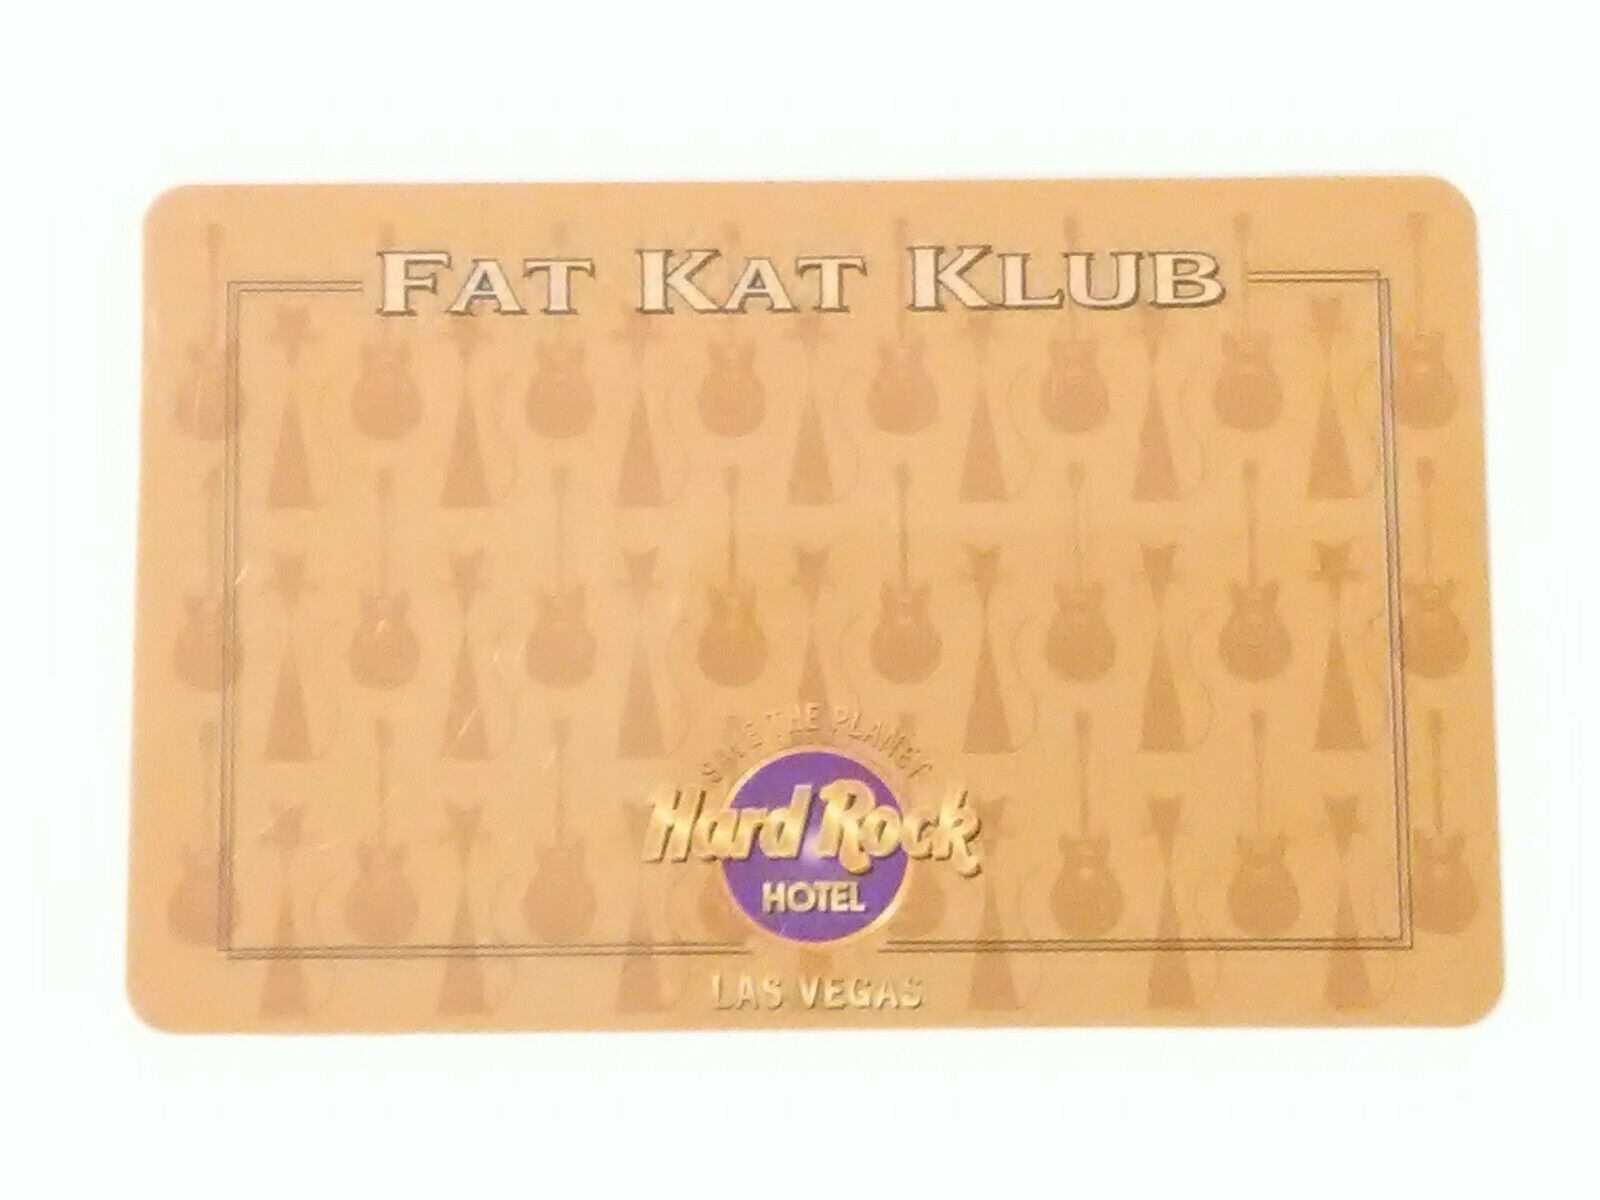 Hard Rock Hotel Casino Las Vegas, Nevada Fat Kat Klub Gold Slot Card!